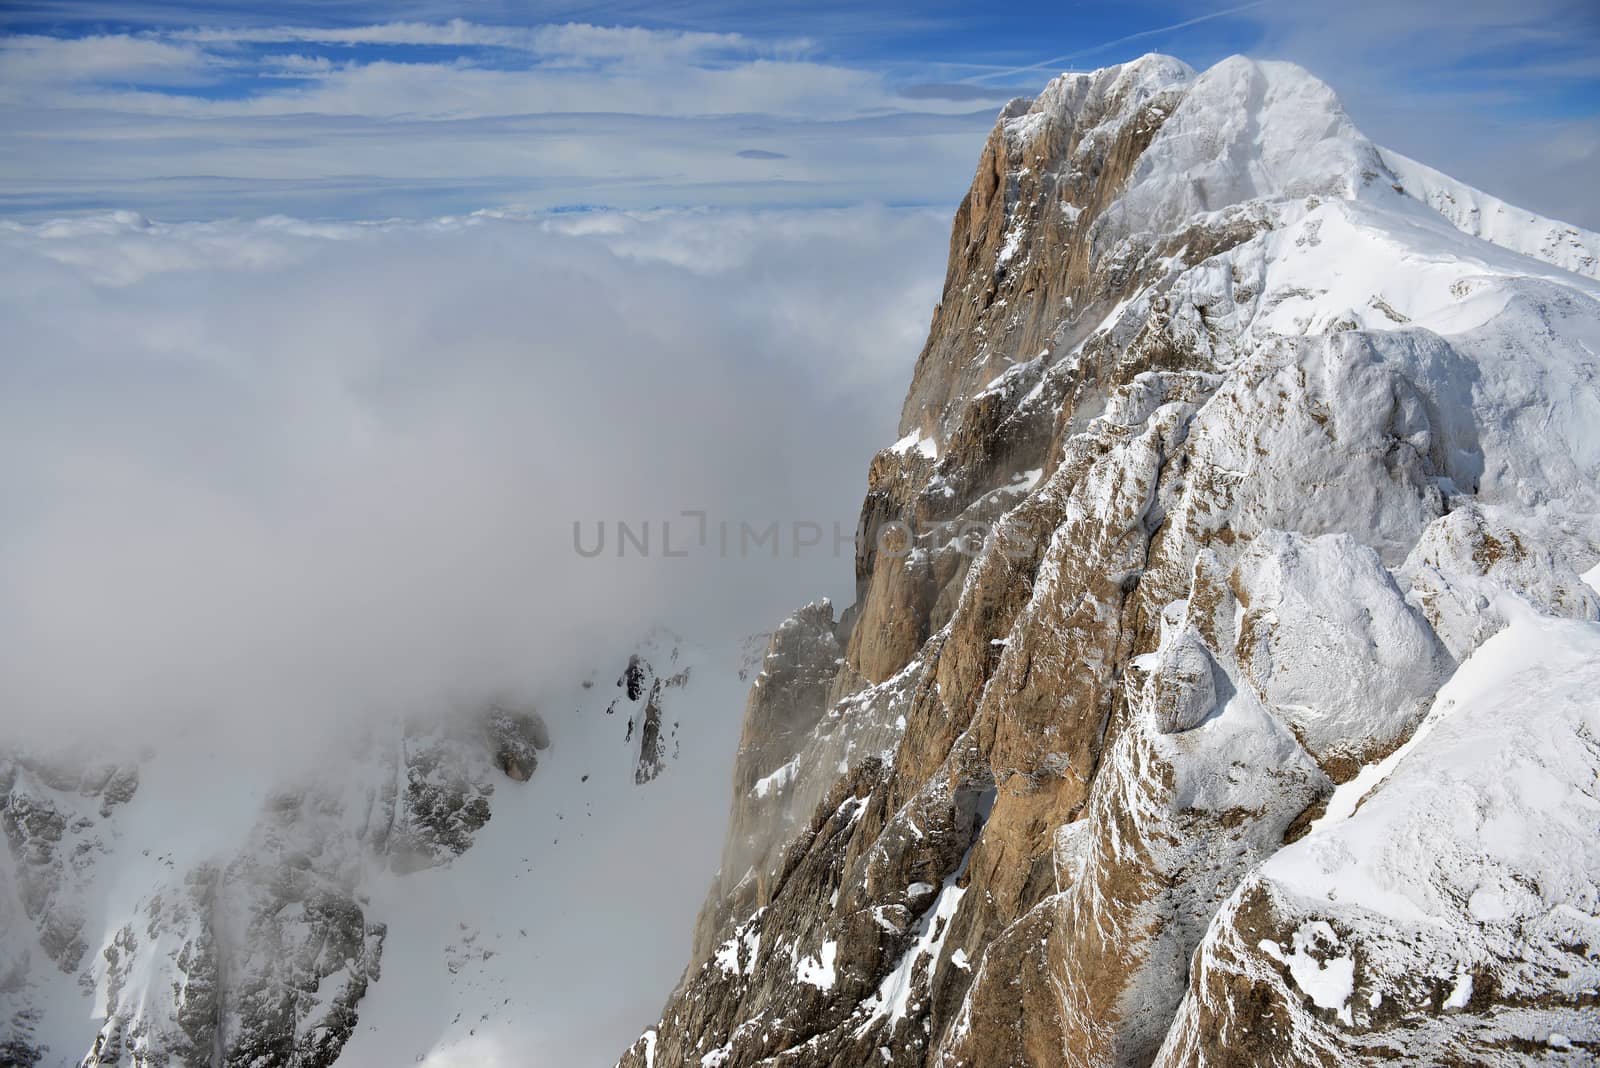 Snowy alpine mountainside with clouds by jetstream4wd